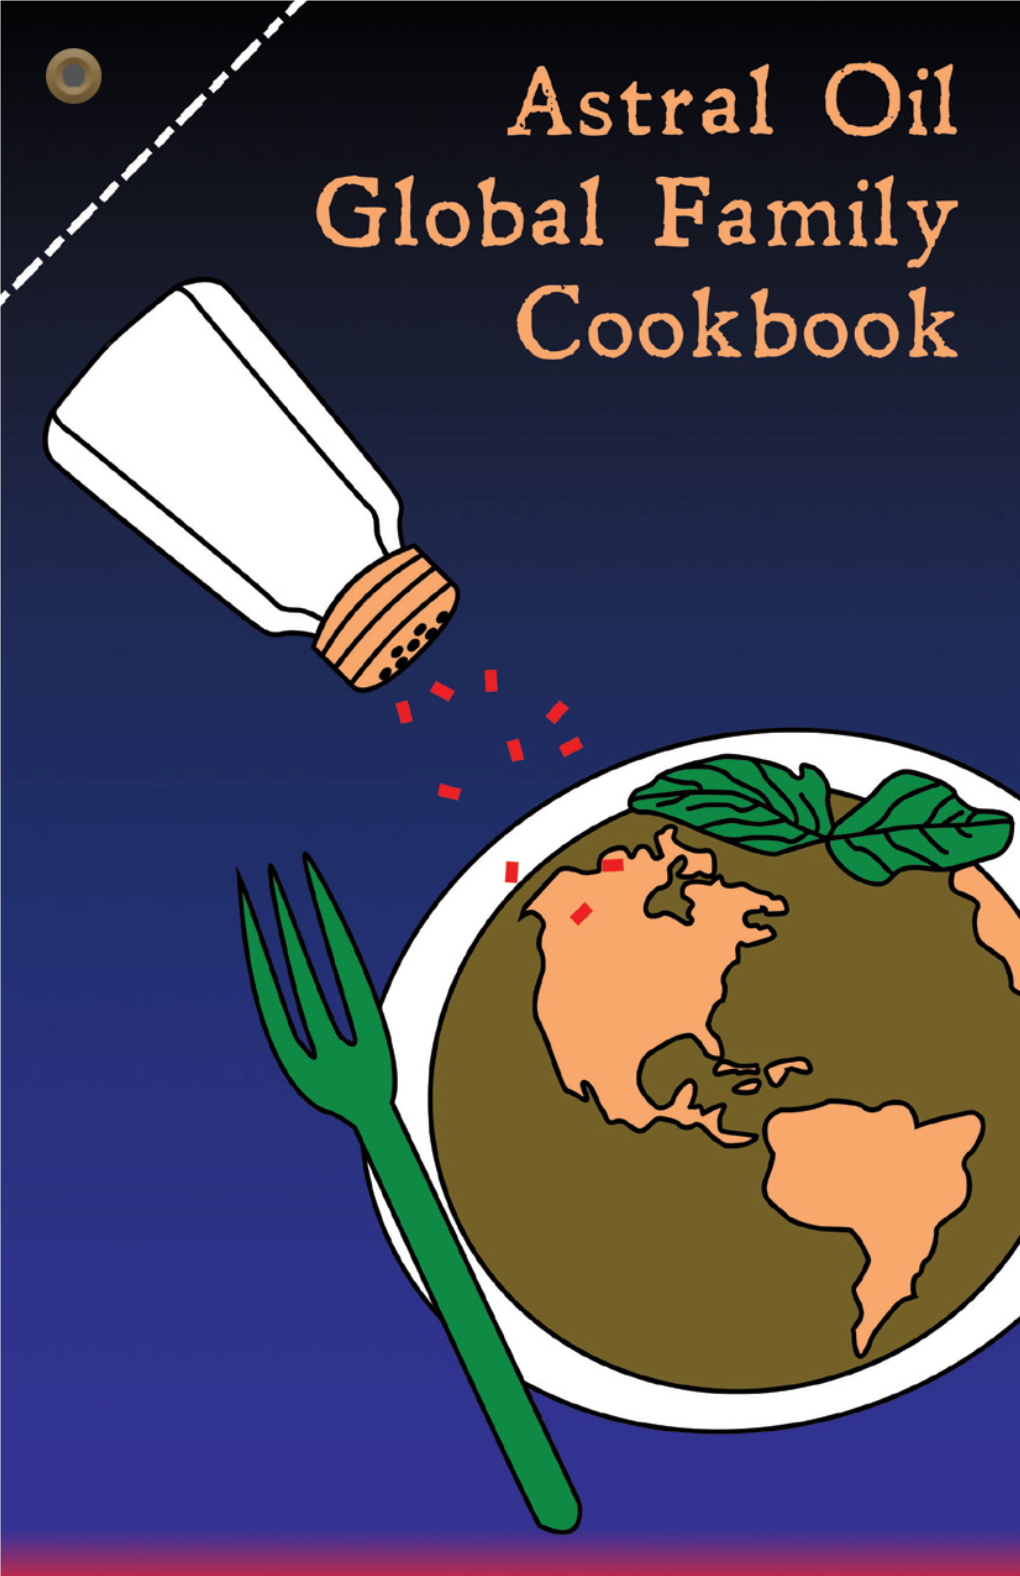 Astral Oil Global Family Cookbook